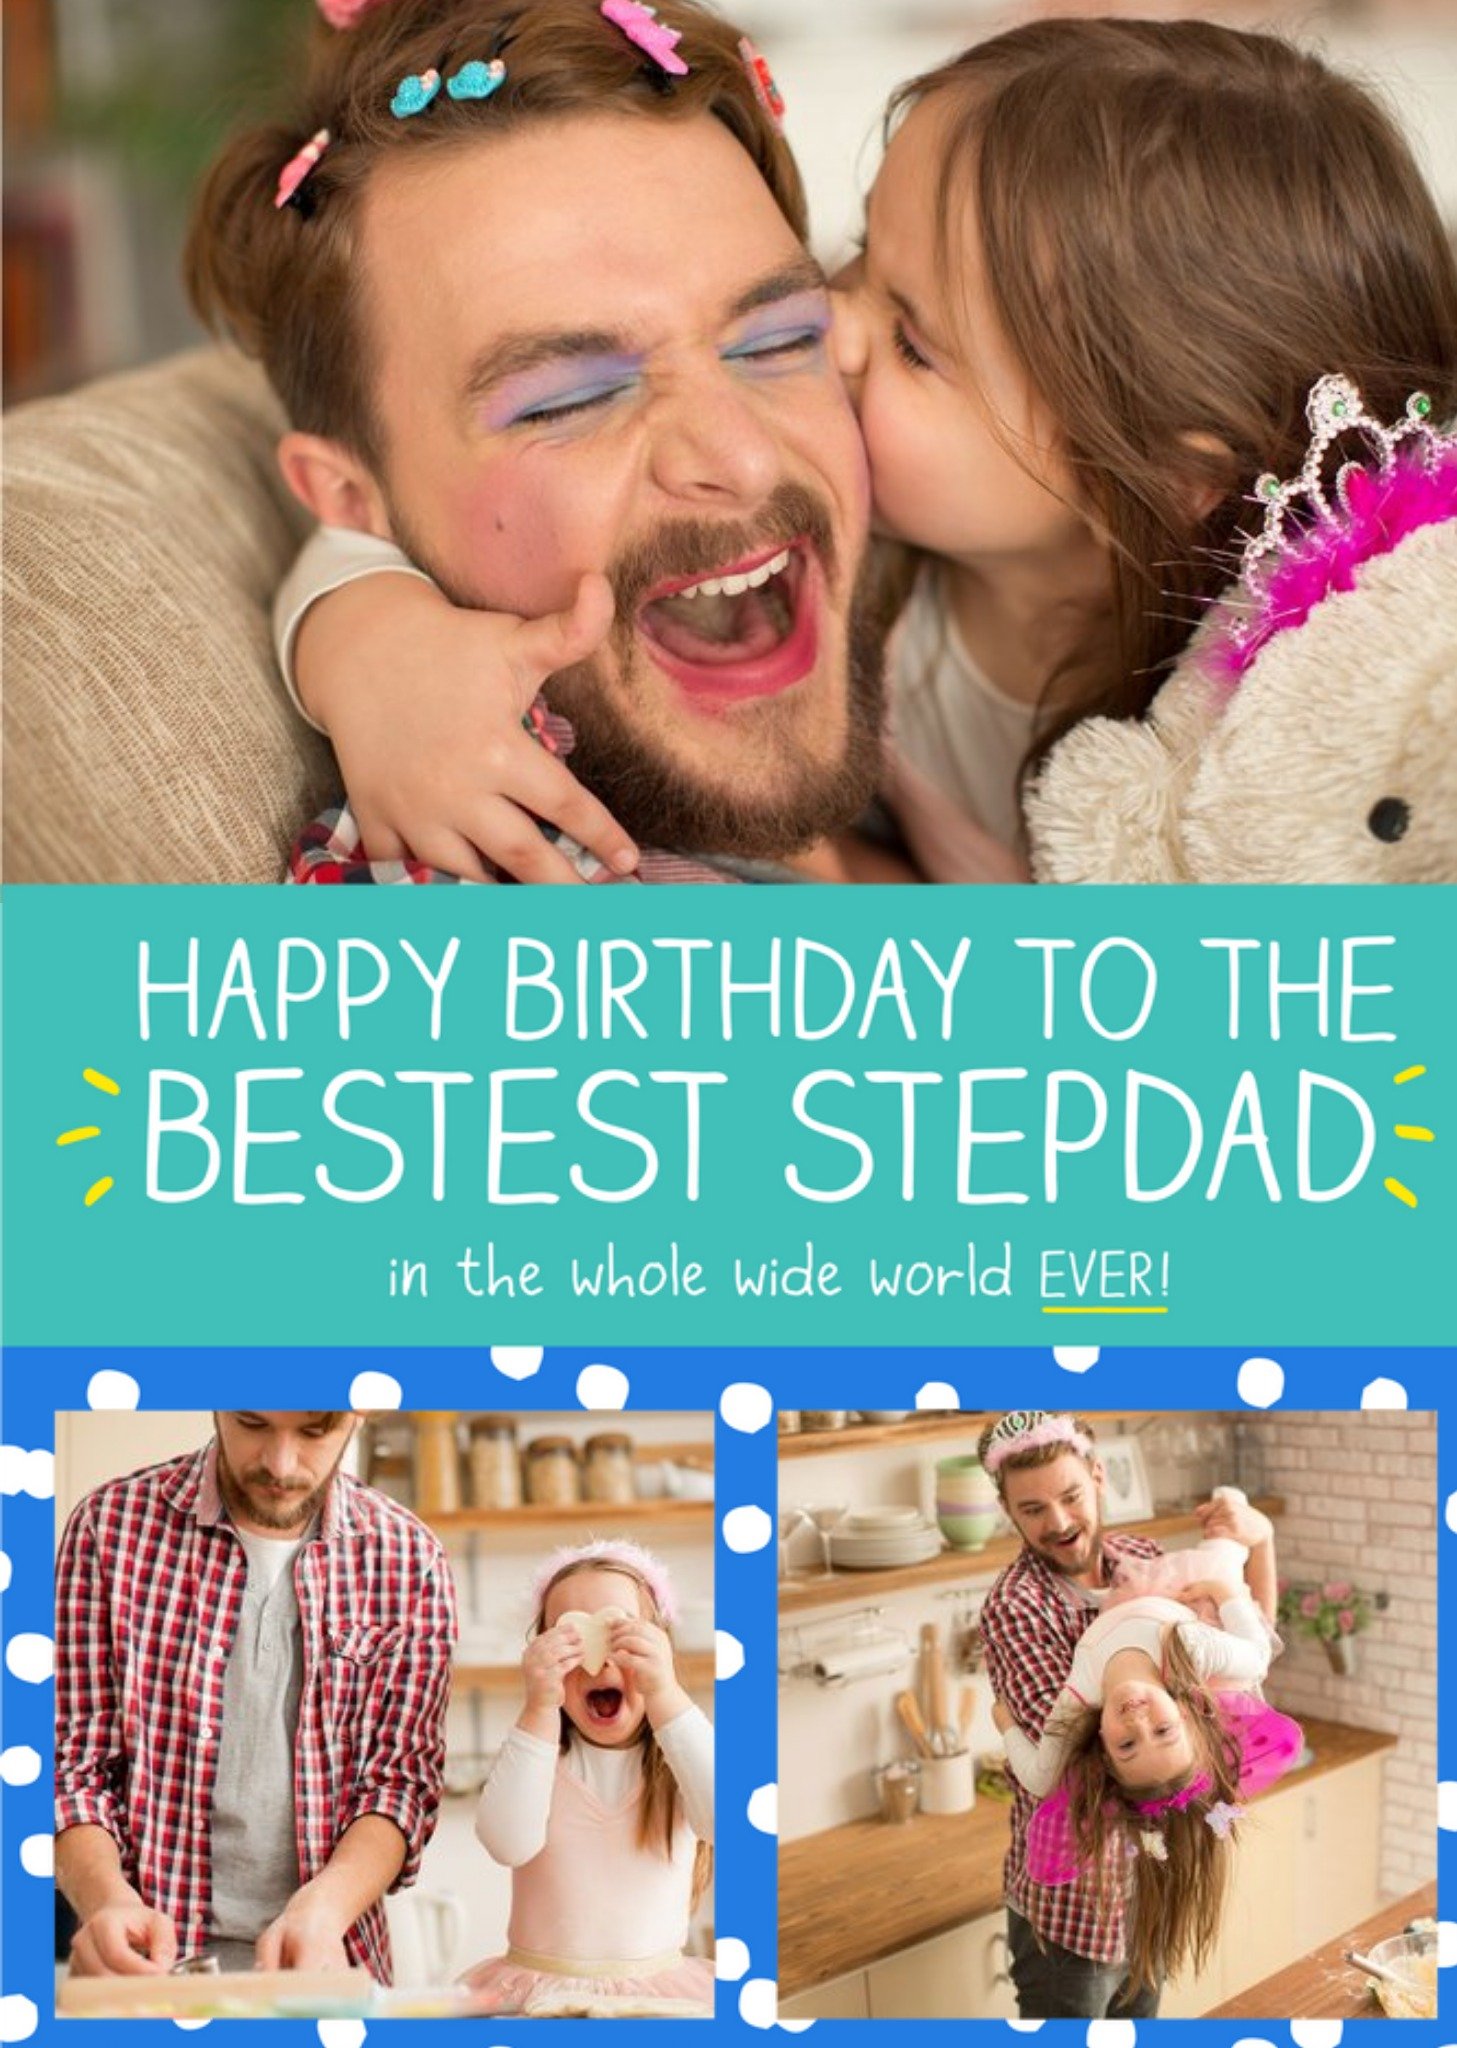 Happy Jackson Bestest Stepdad Personalised Photo Birthday Card, Large